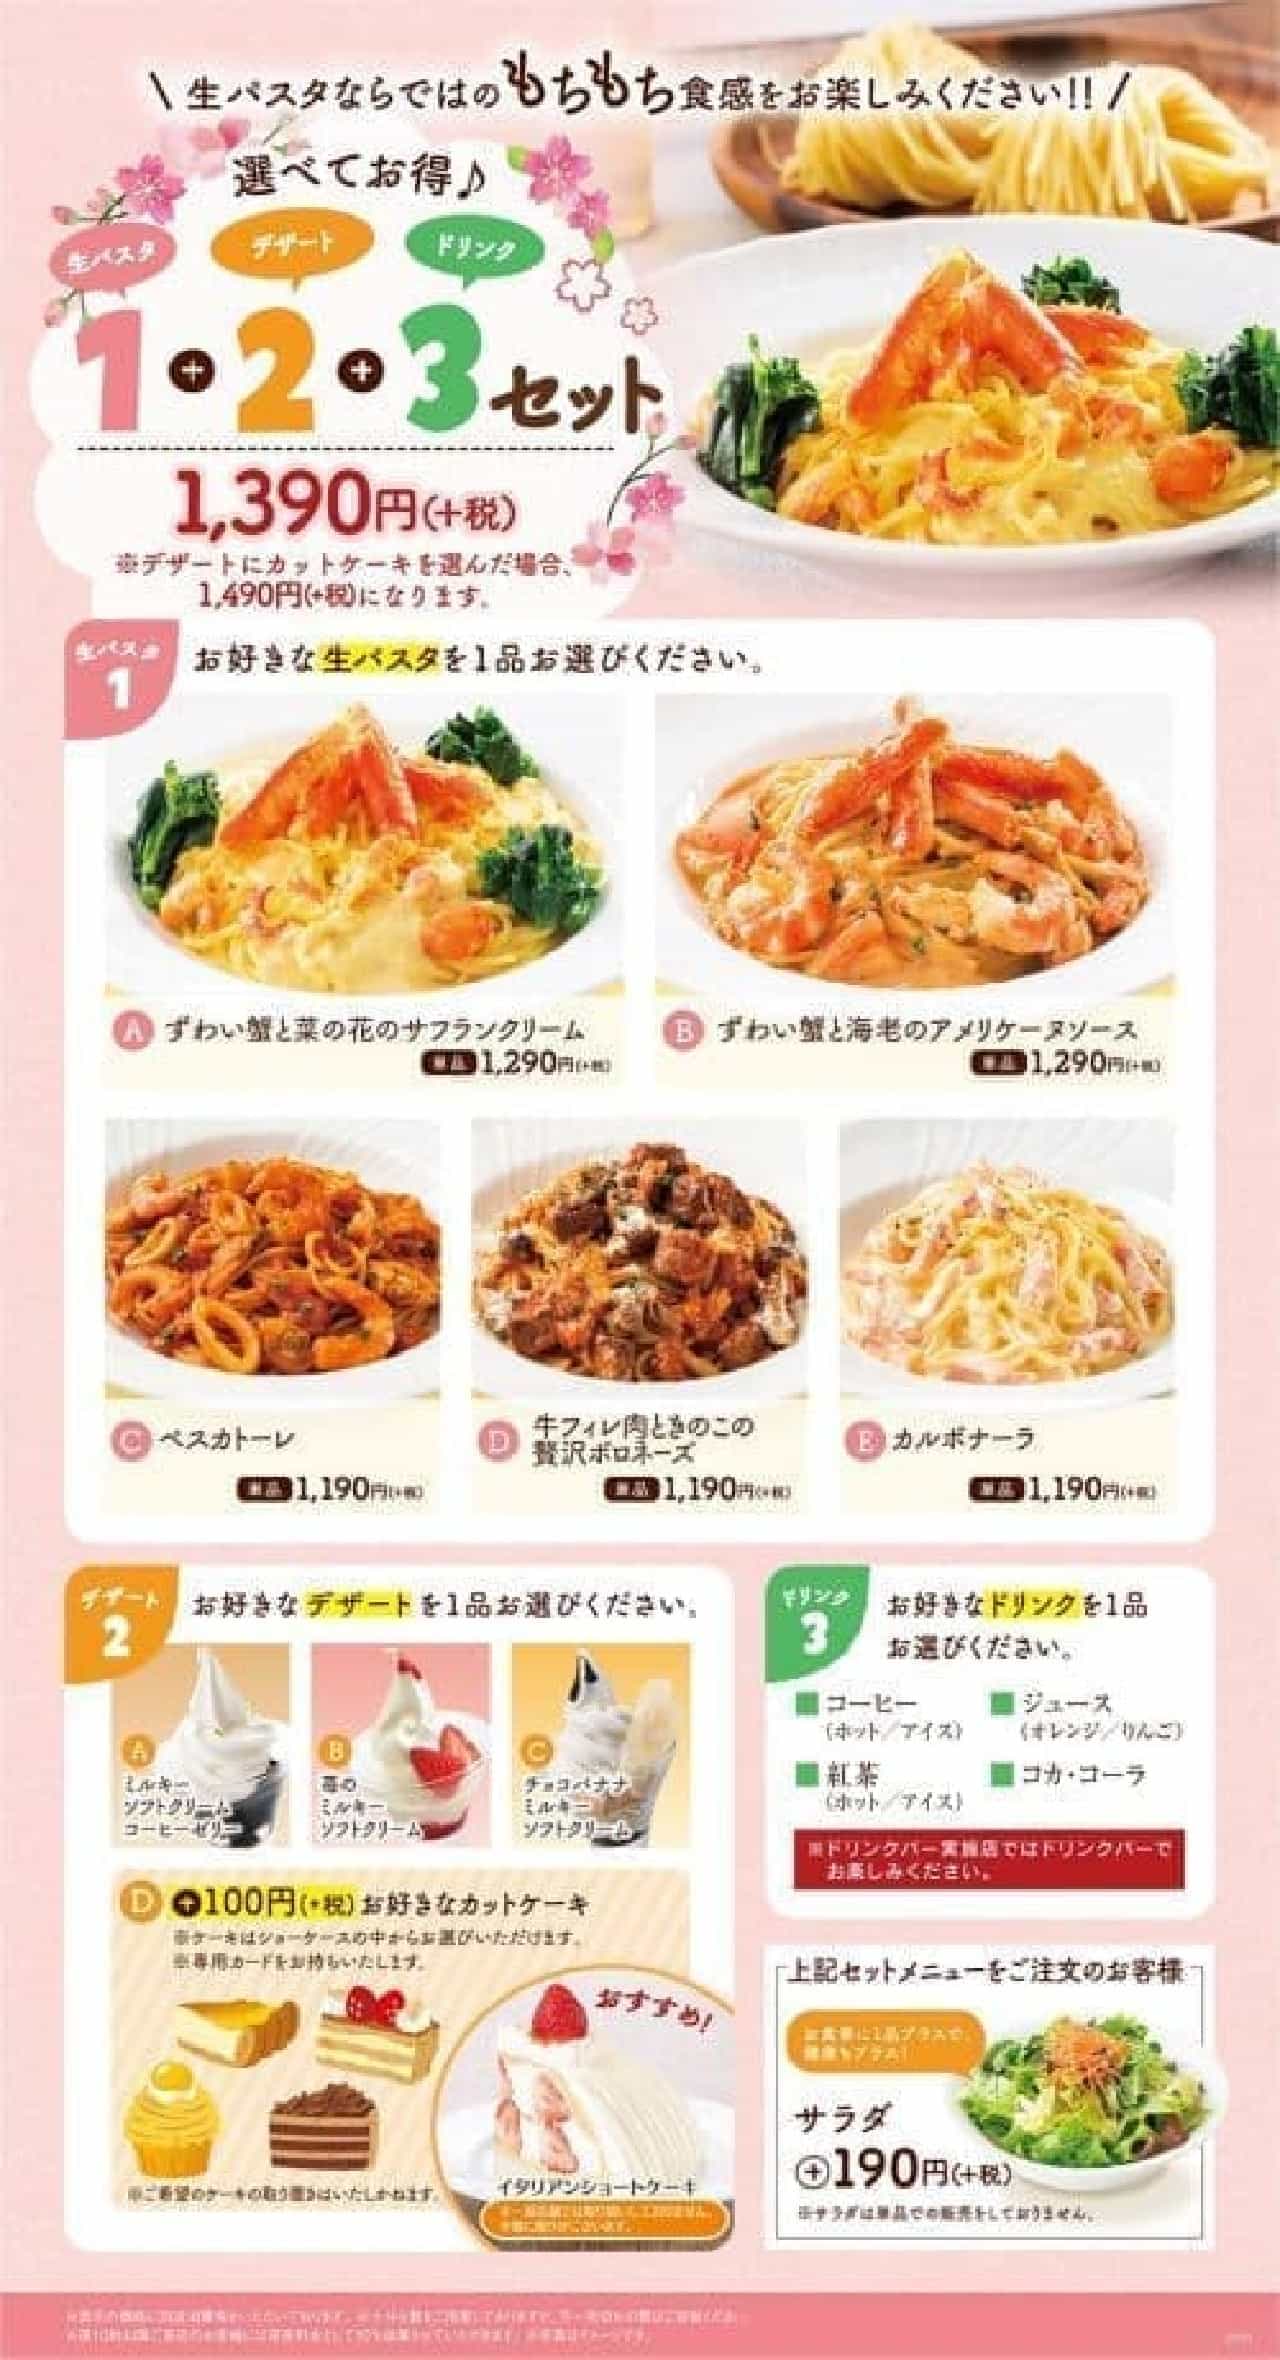 Fujiya Restaurant "Choice of fresh pasta and great value set menu"